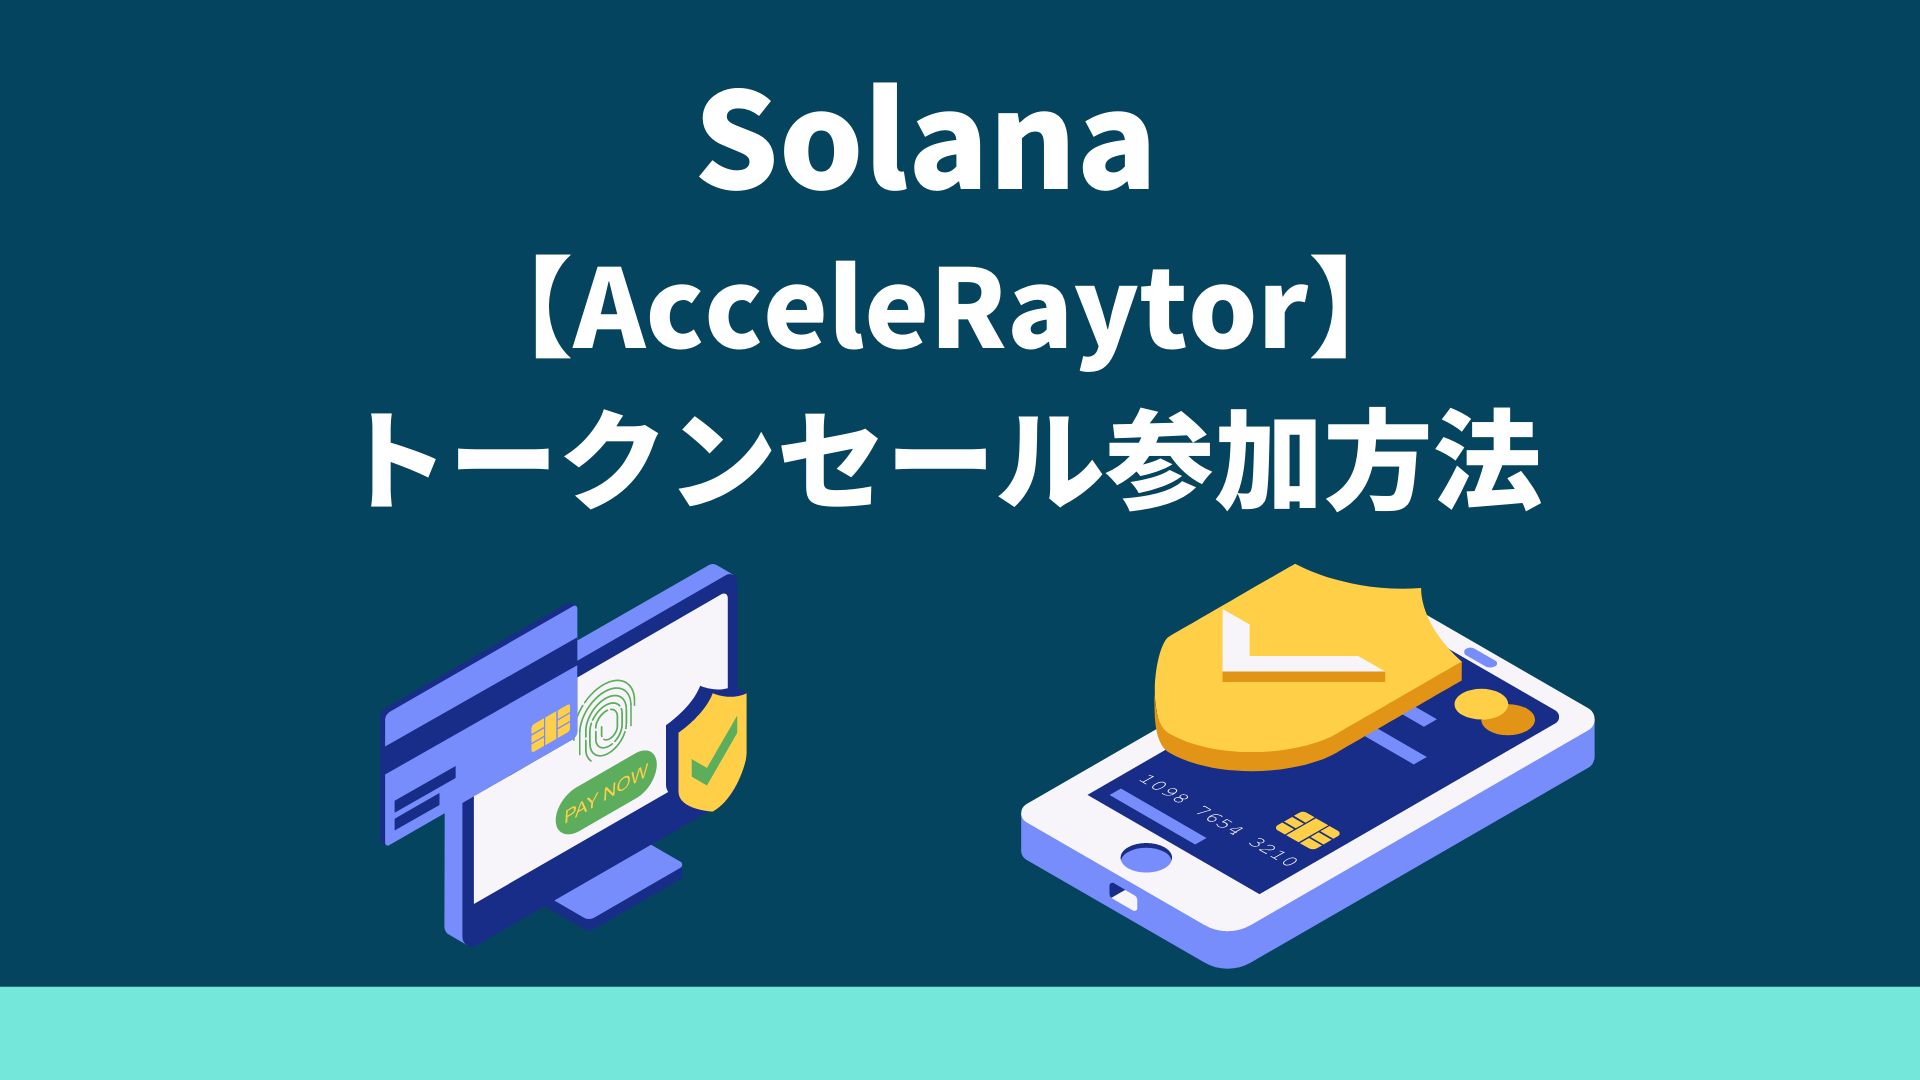 Solana AcceleRaytorトークンセールの参加方法